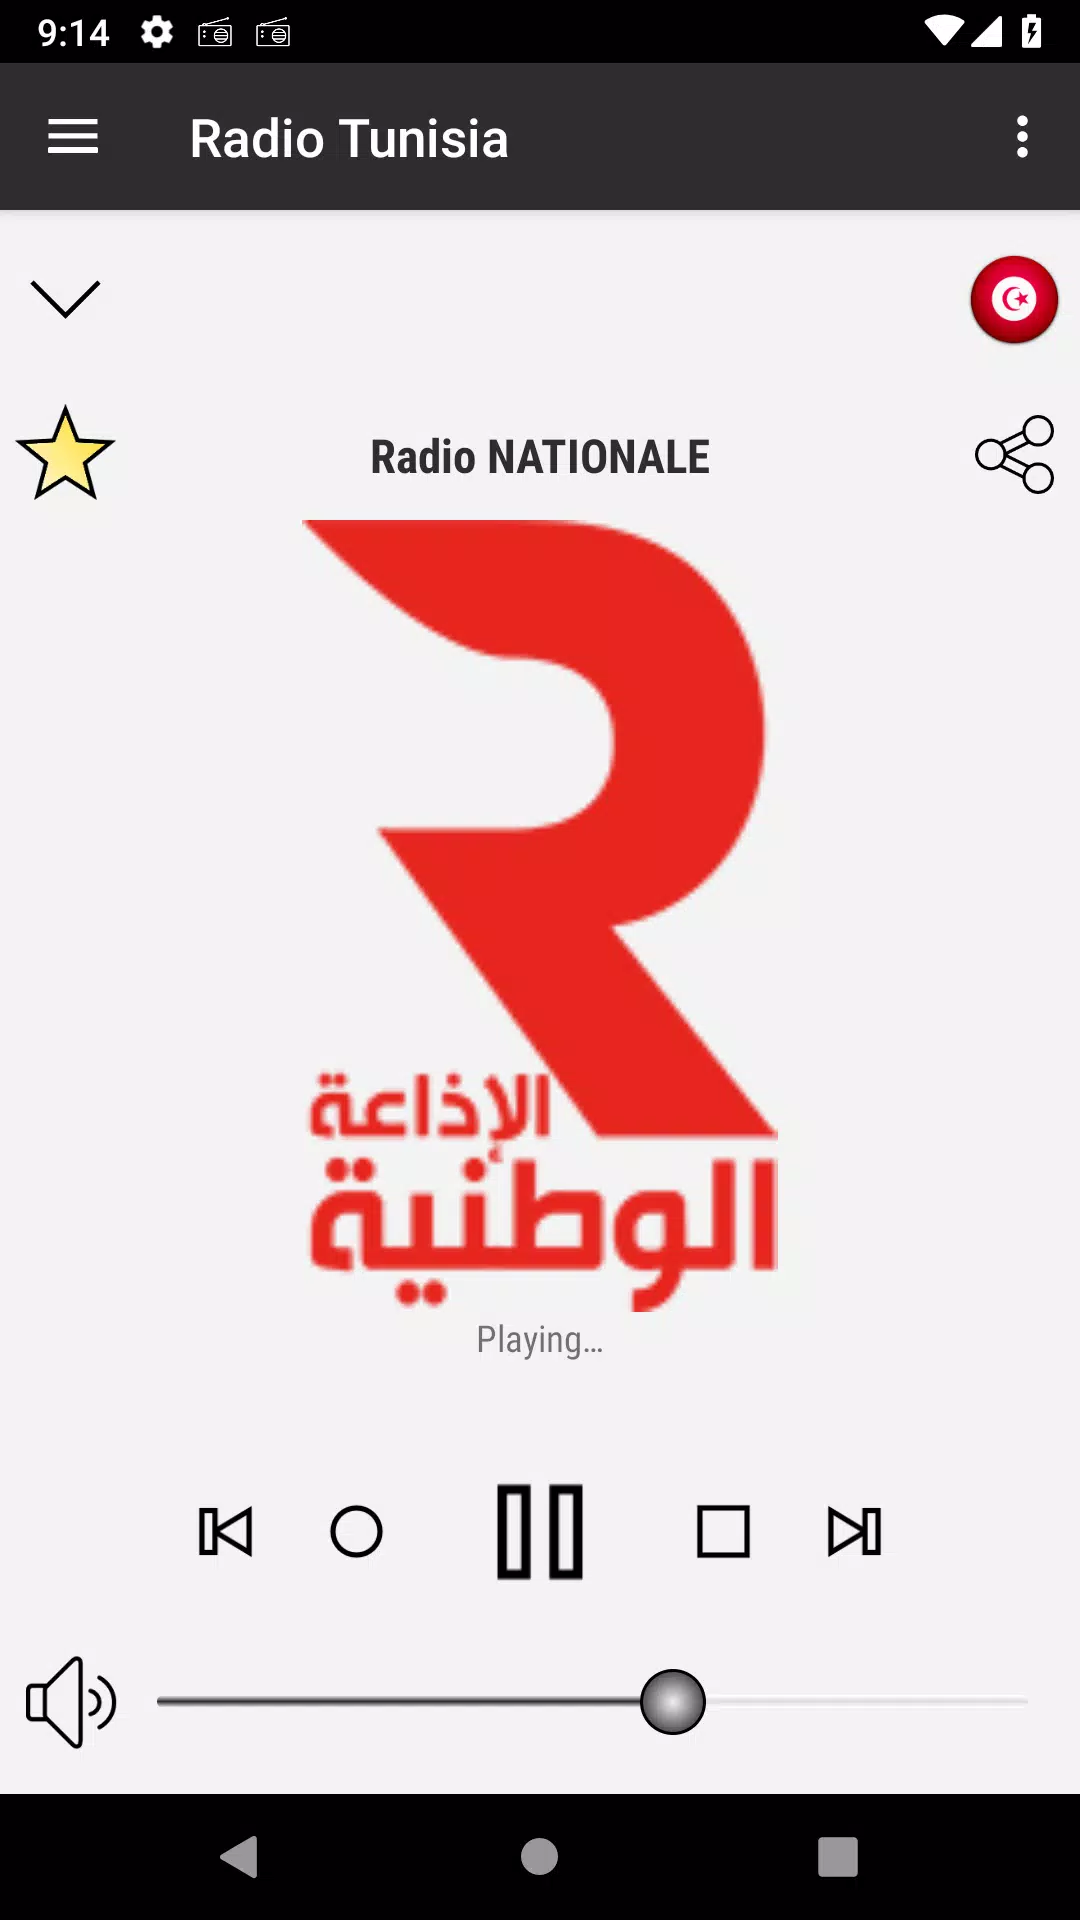 RADIO TUNISIE PRO for Android - APK Download